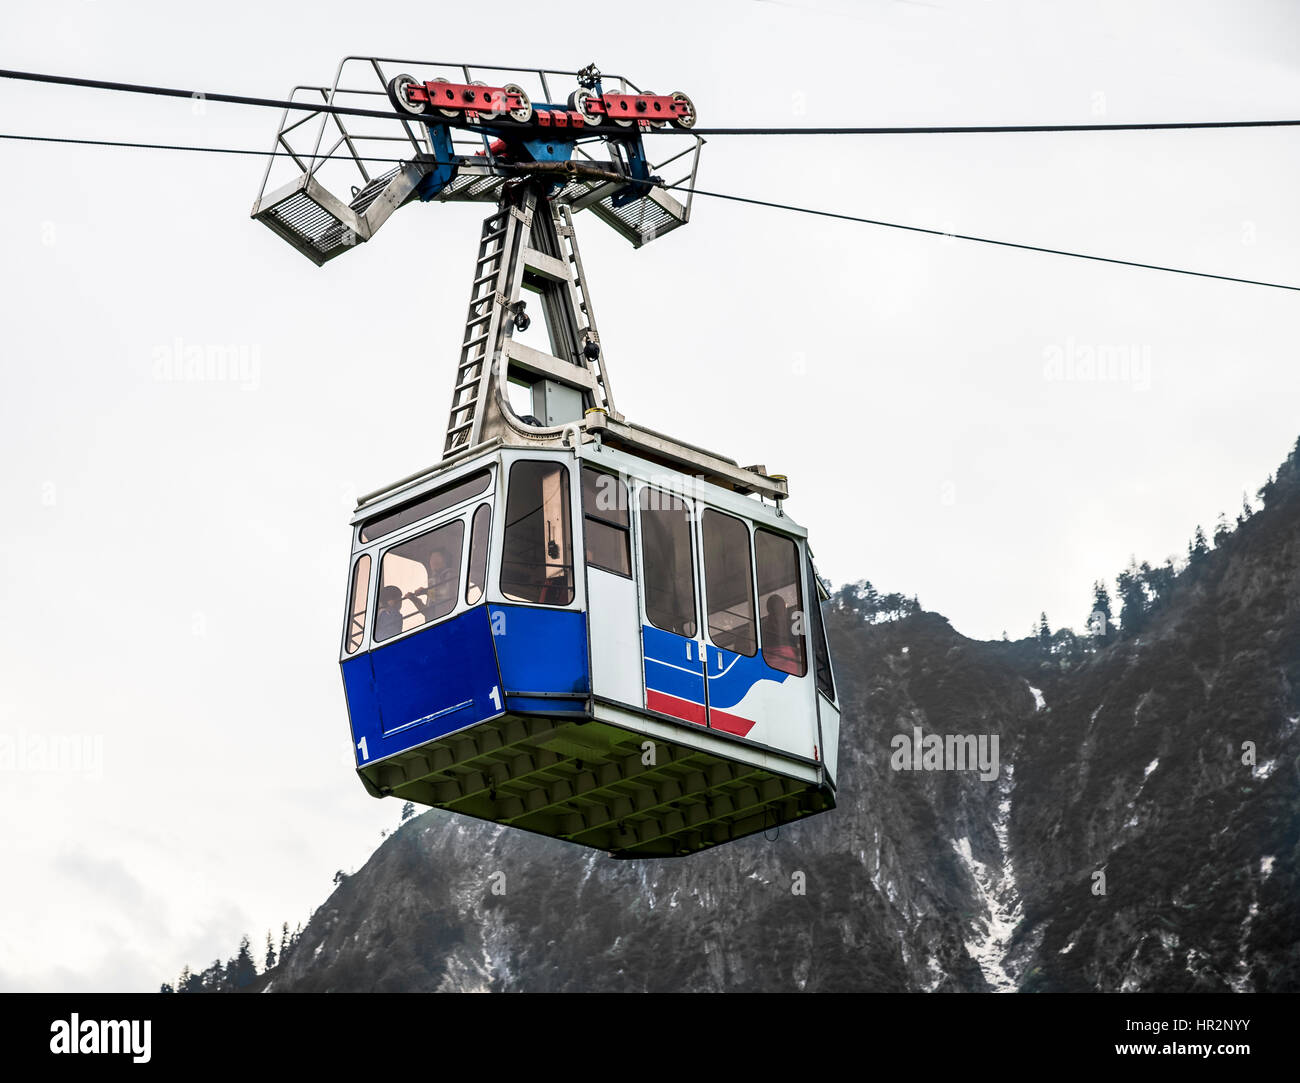 A gondola or cable car takes passengers up the Untersberg mountain near Salzburg, Austria. Stock Photo